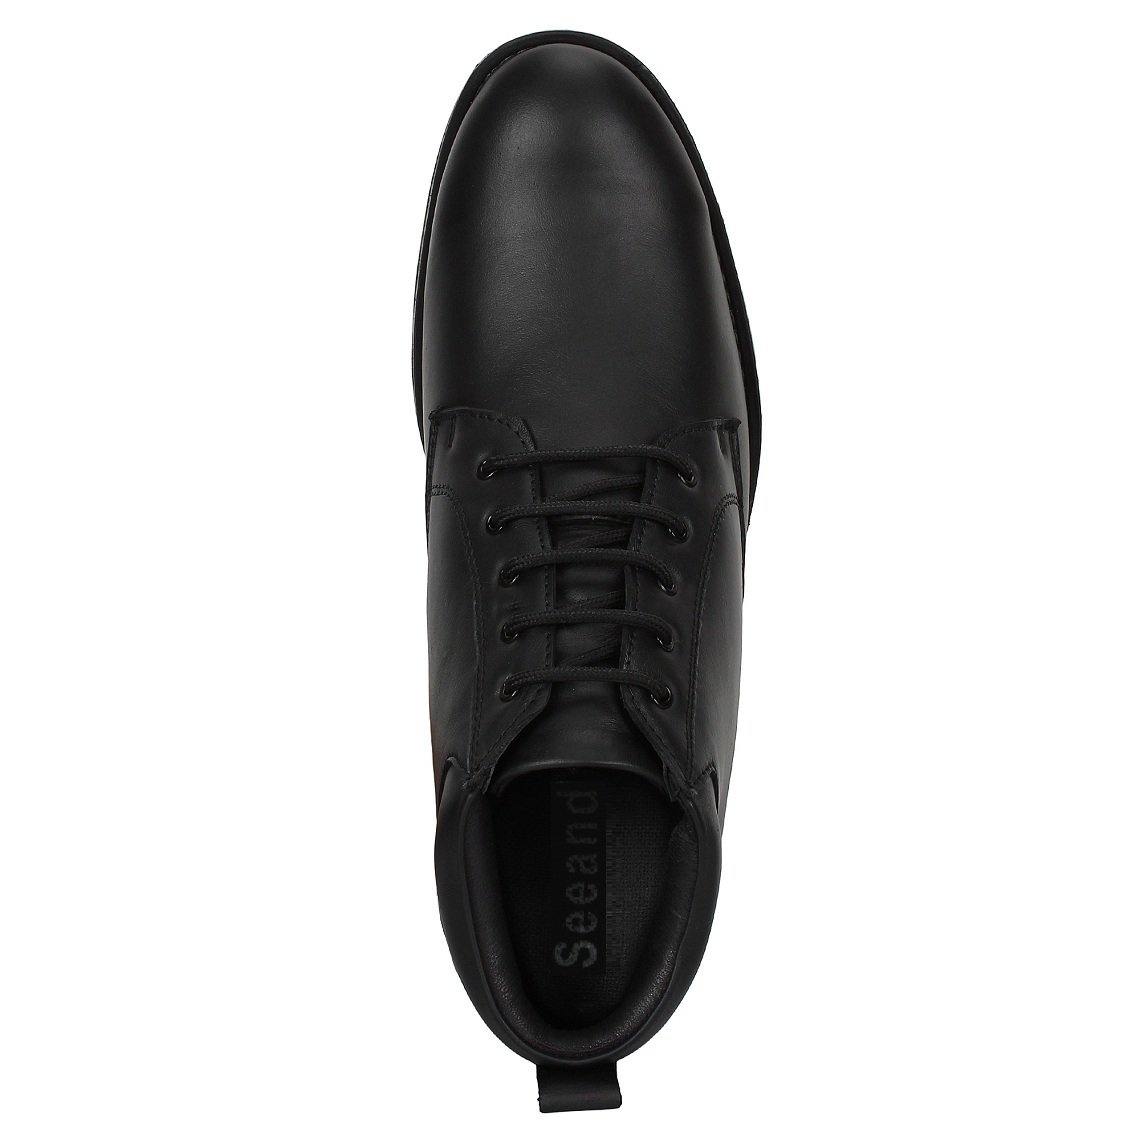 SeeandWear Genuine Leather Classic Ankle Boots - SeeandWear